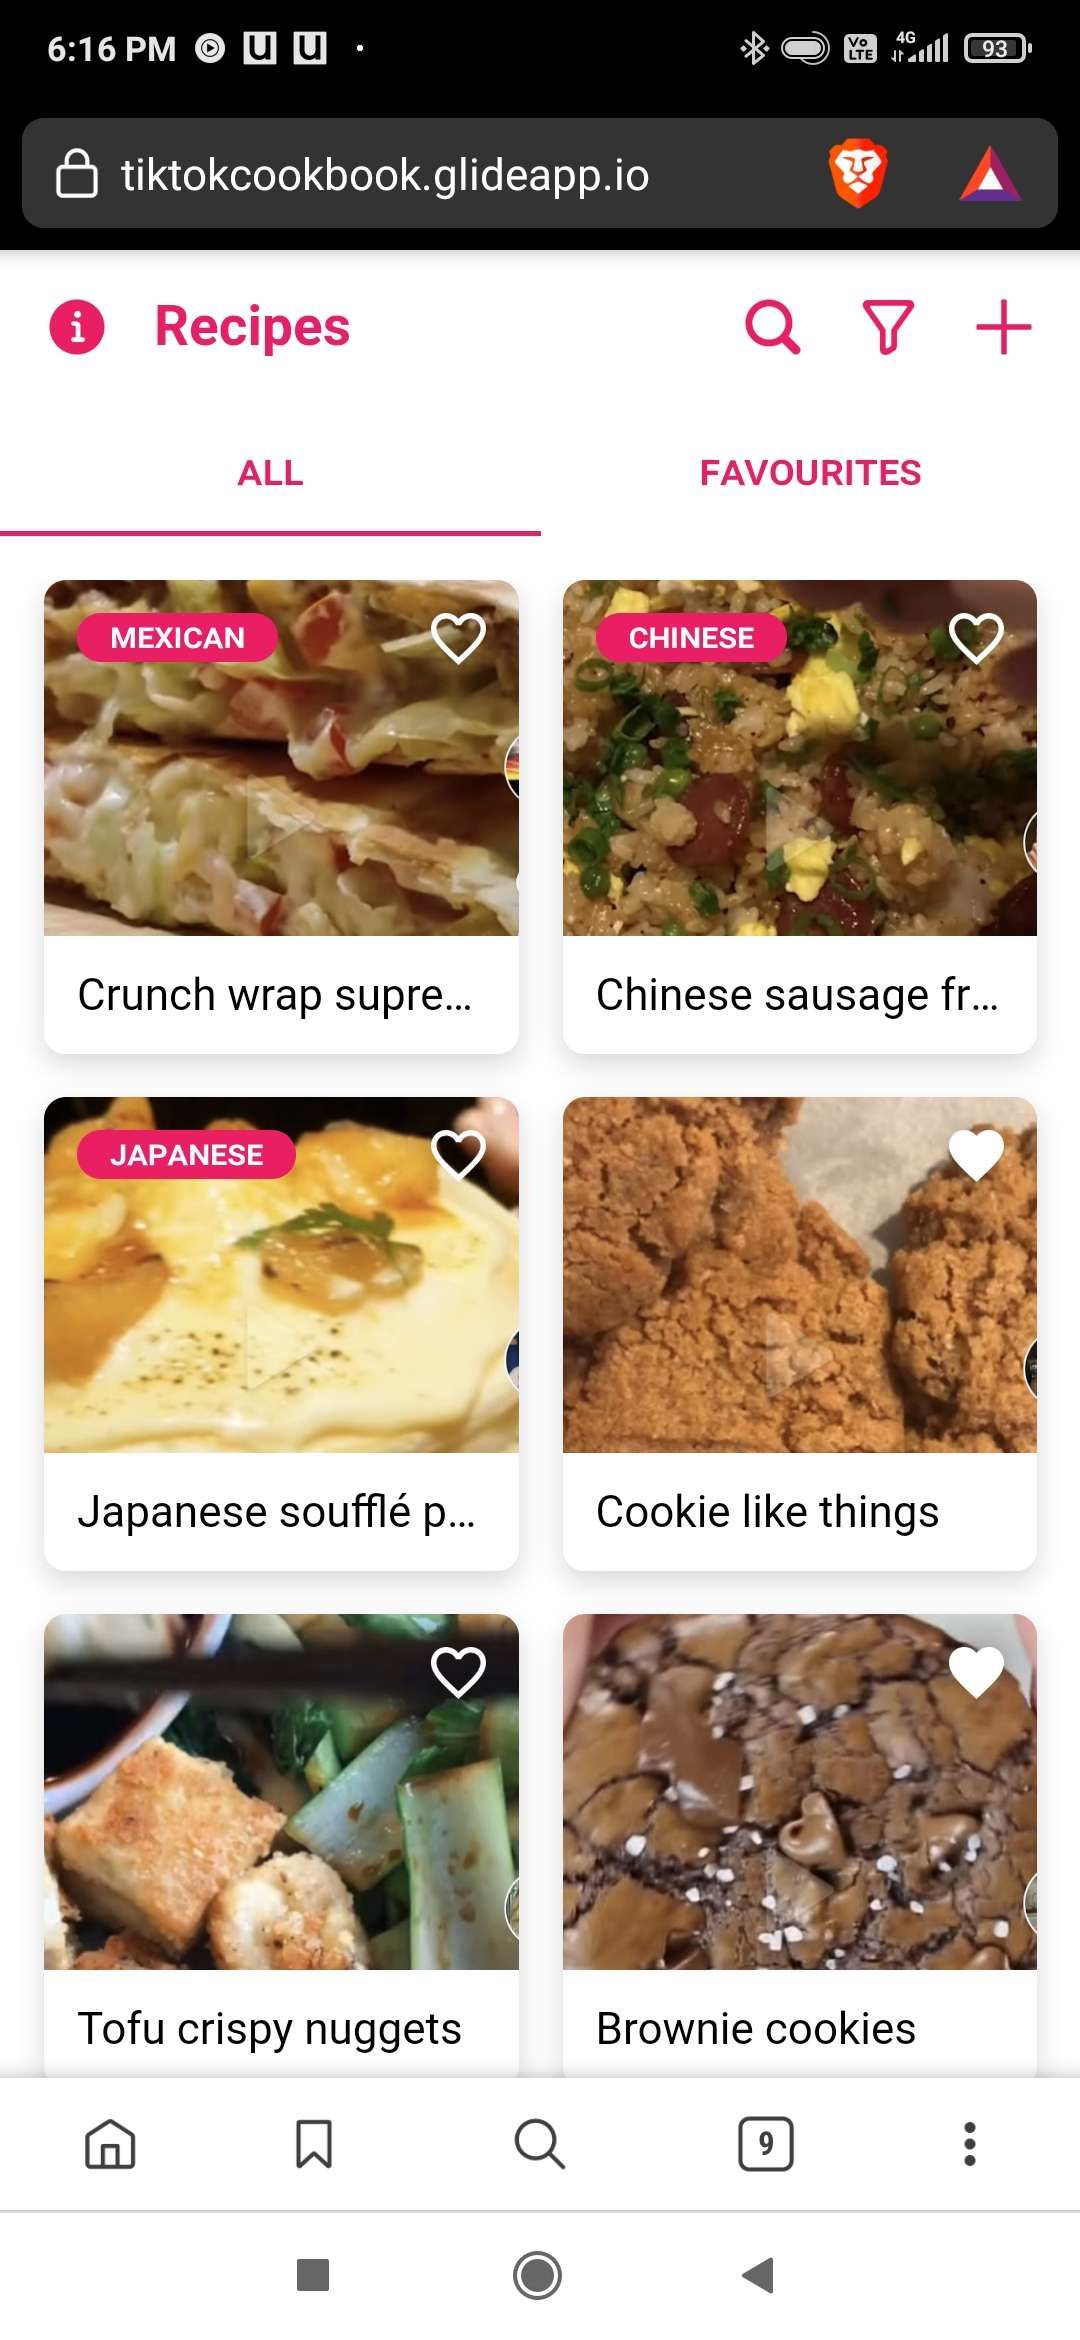 TikTok Cookbook collects the best short recipe videos on TikTok